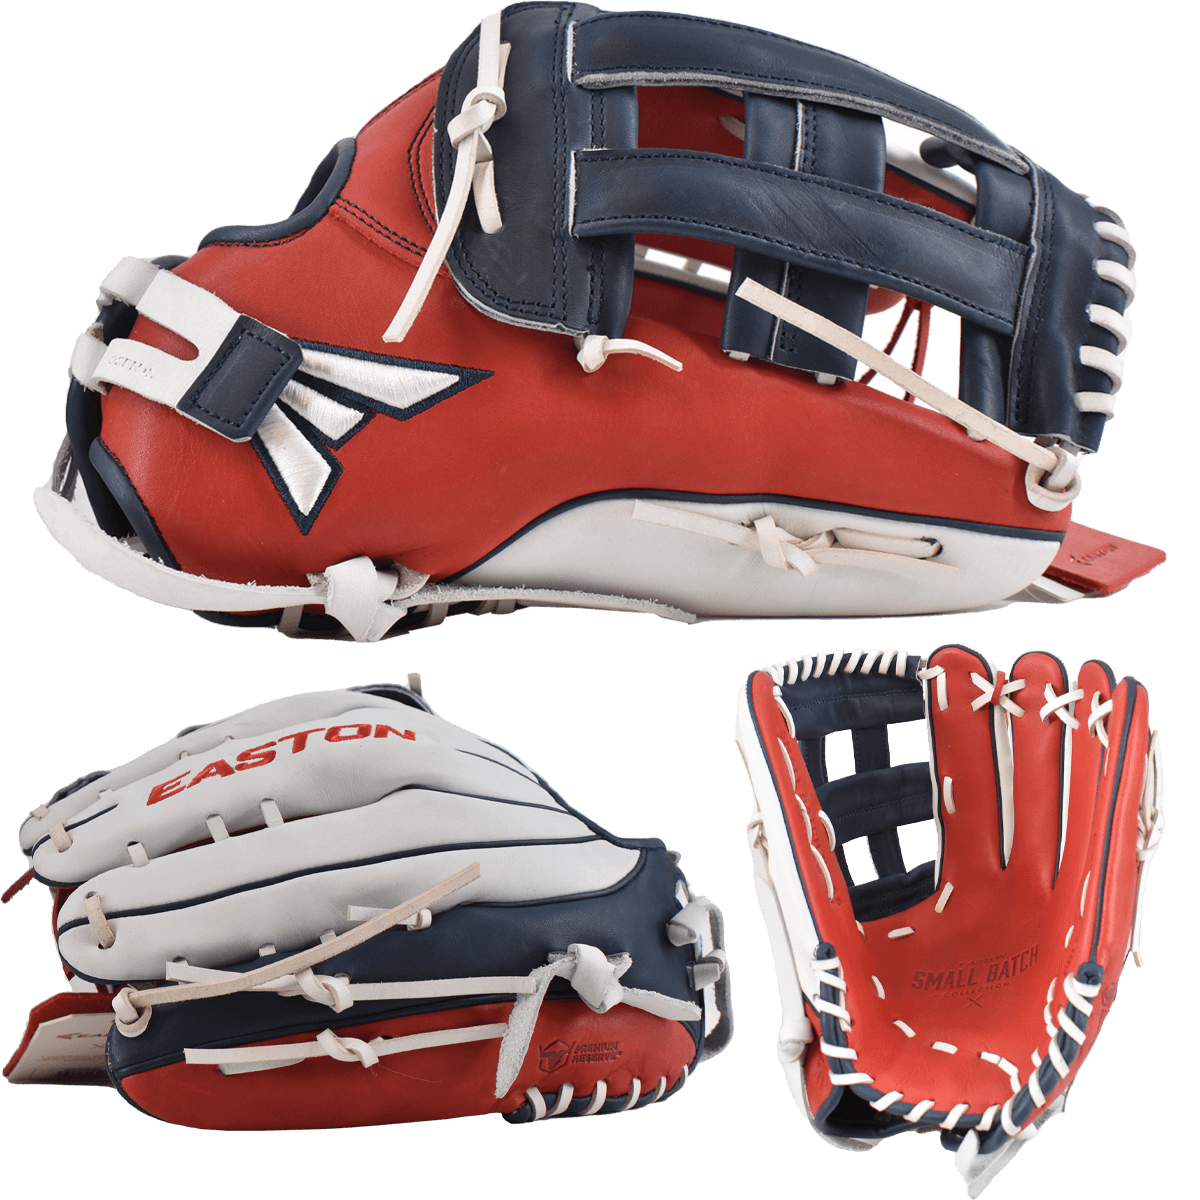 2022 Easton Small Batch No. 56 Slowpitch Softball Glove - Red/Navy/White - Smash It Sports